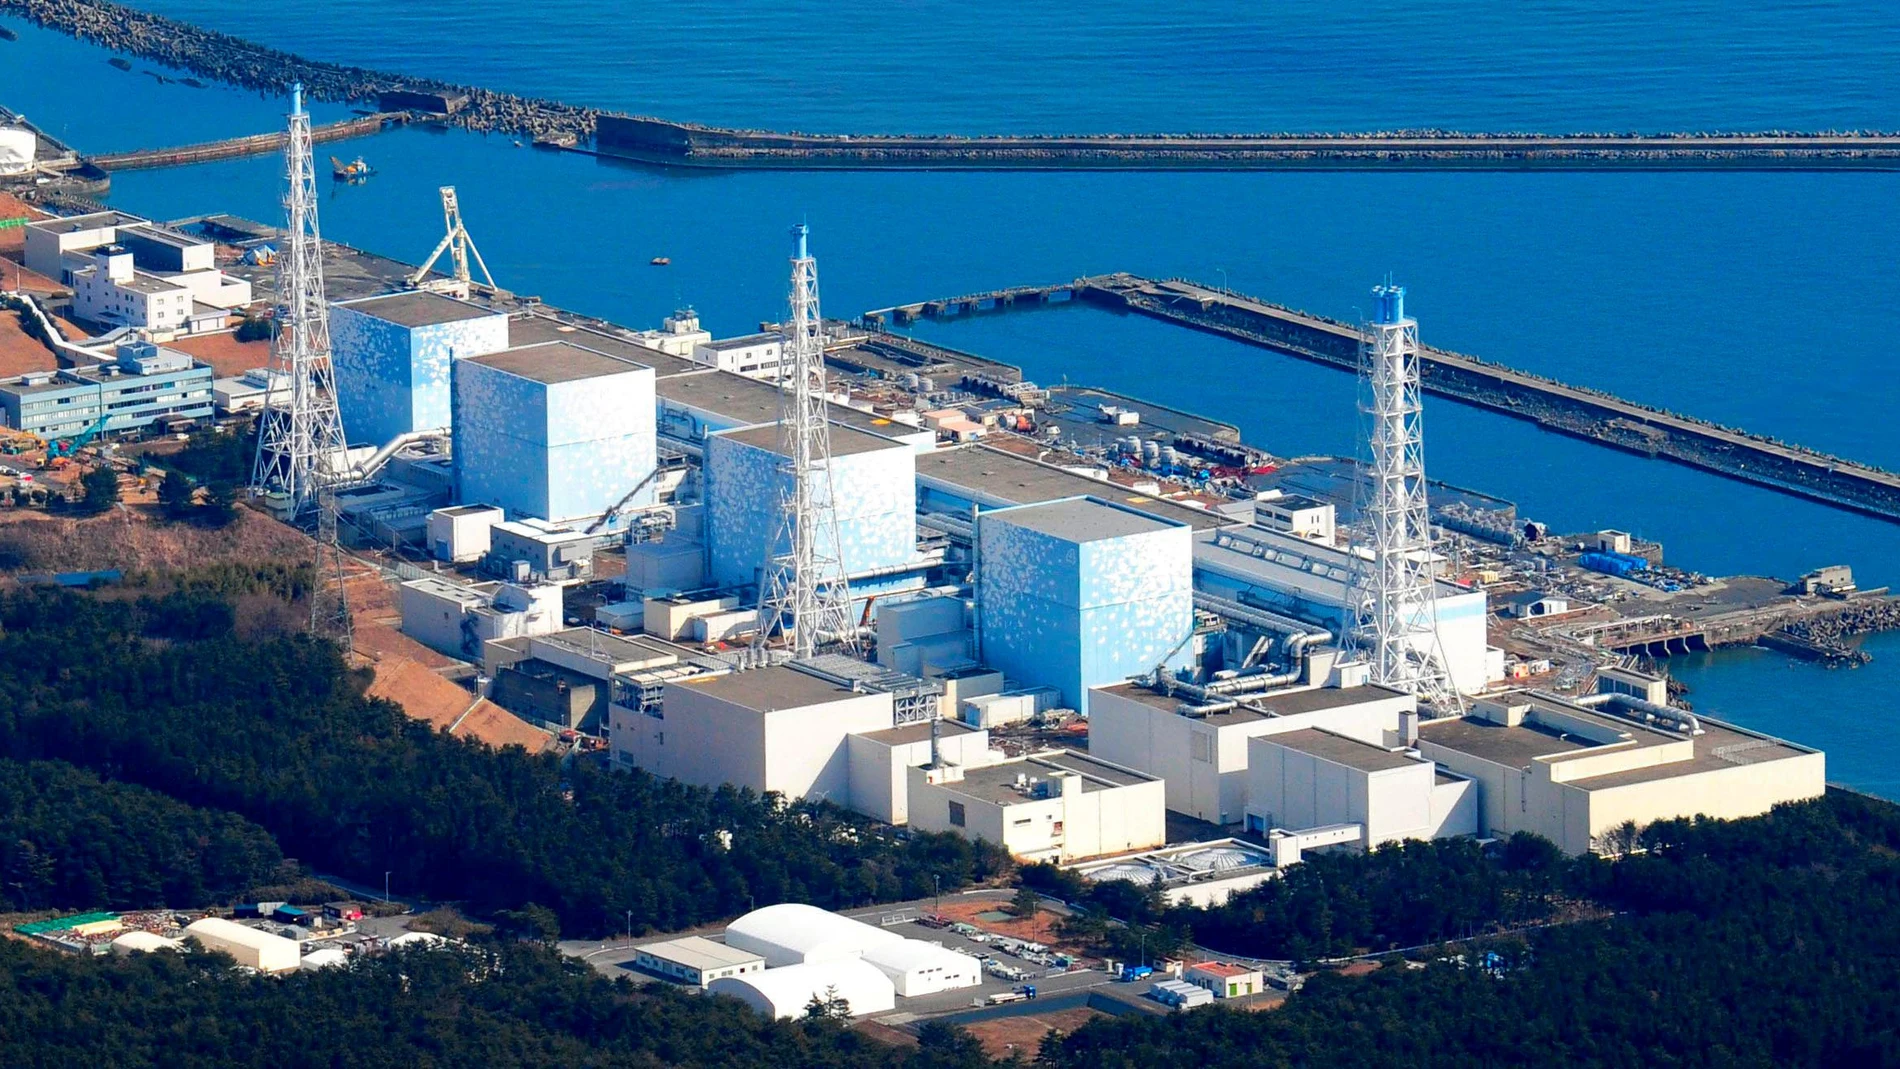 Vista aérea de la planta nuclear japonesa de Fukushima Daiichi